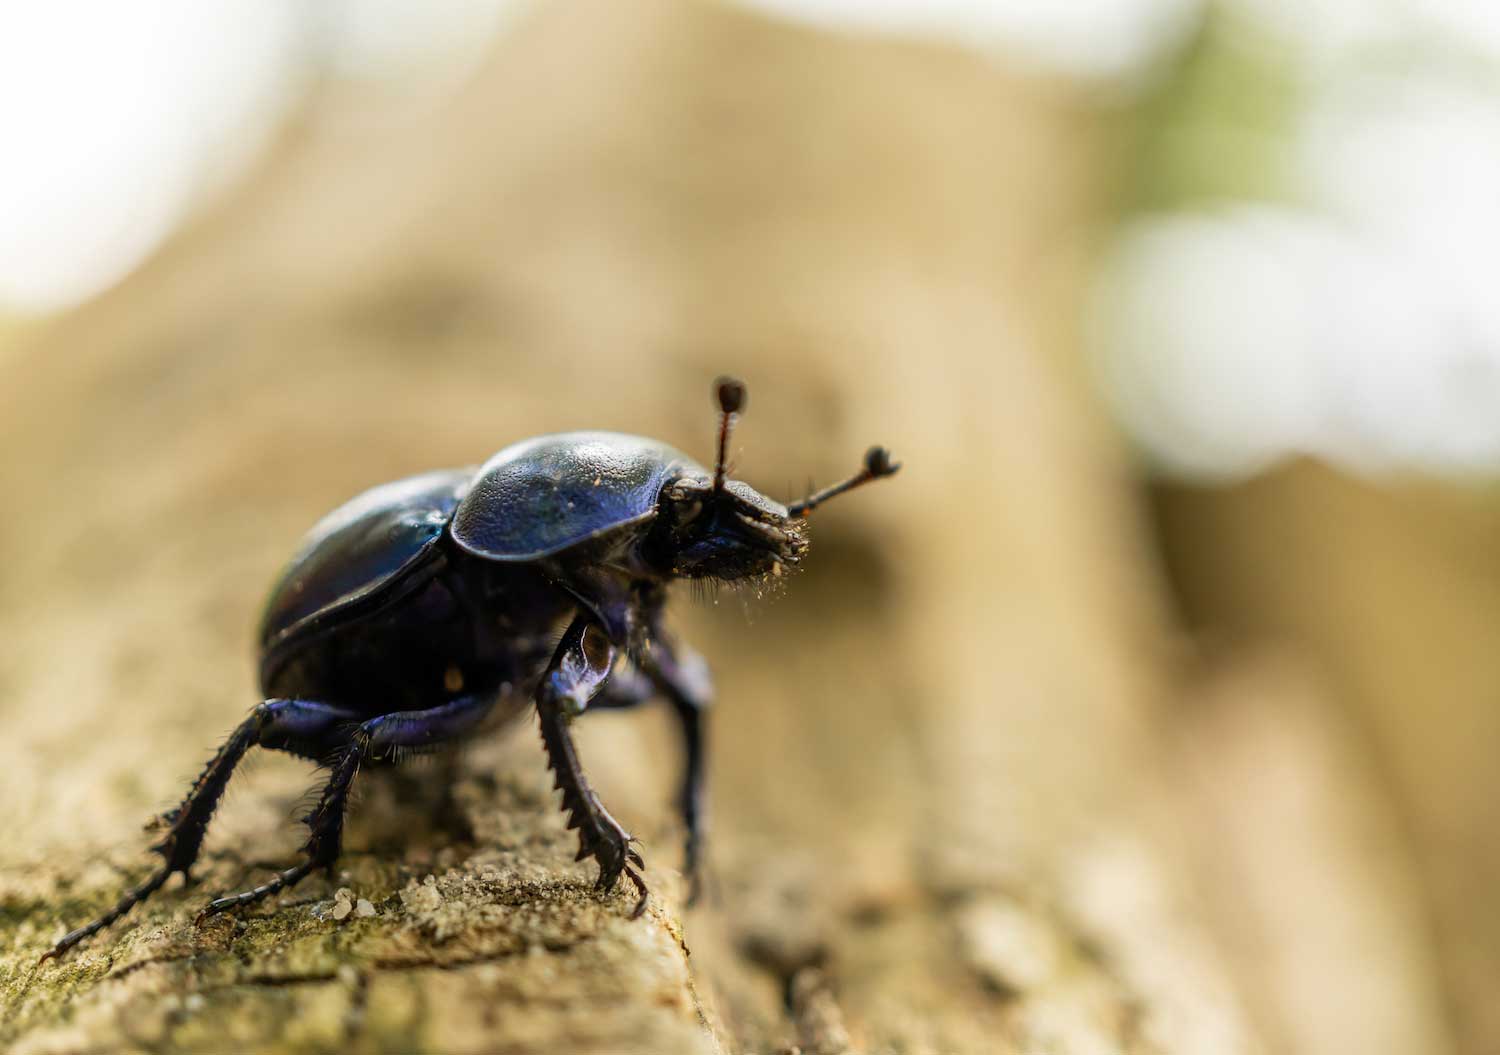 A scarab beetle on a log.